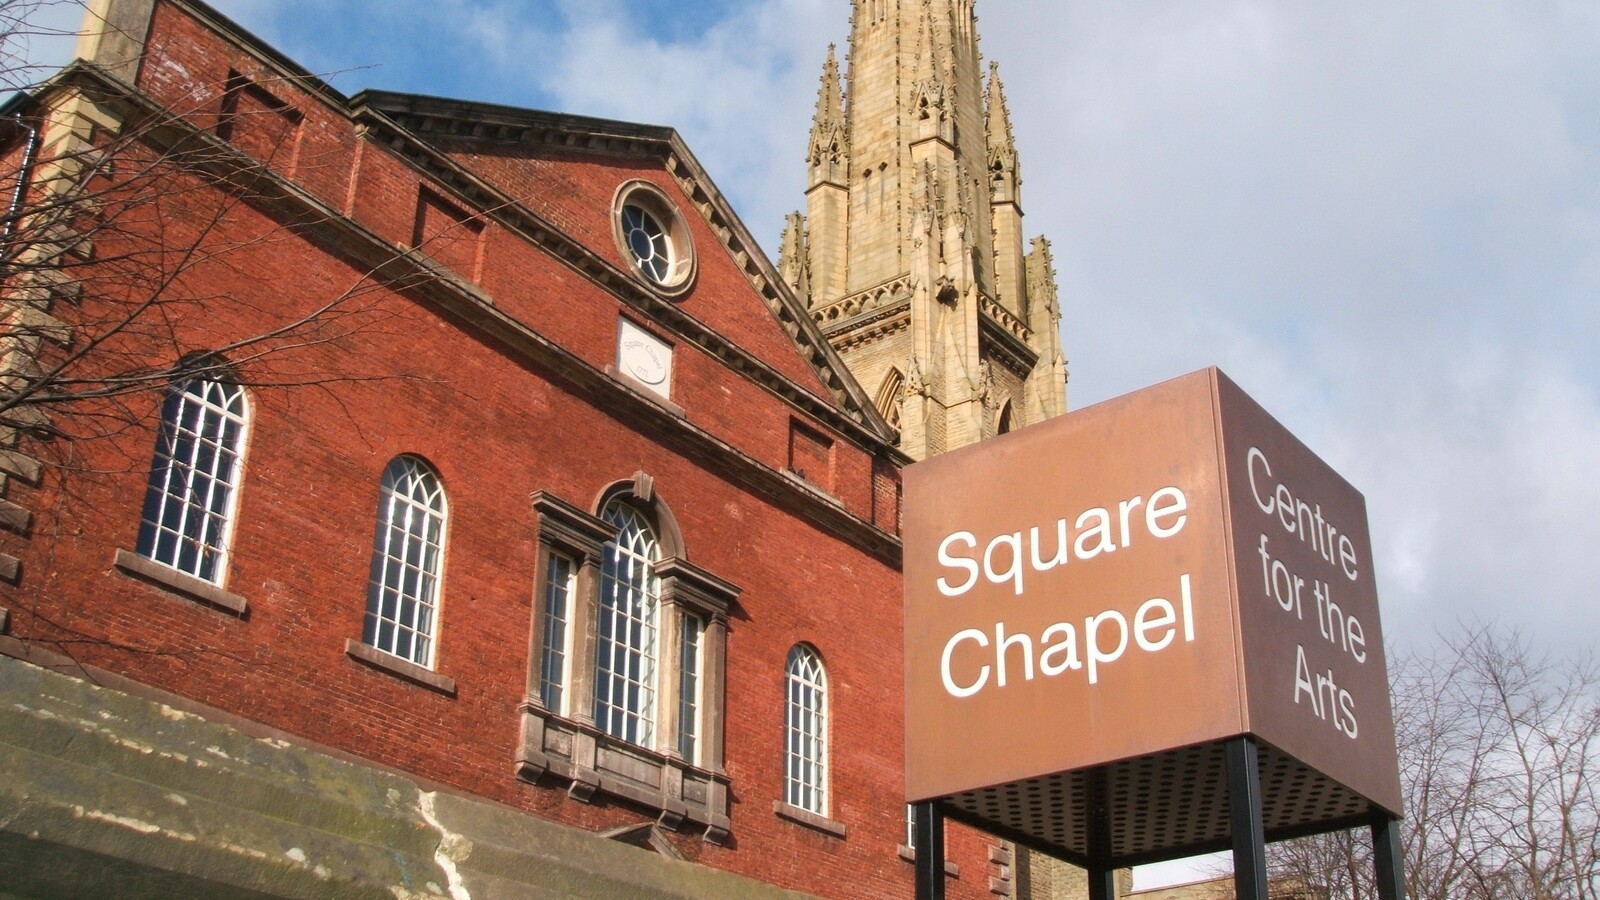 Square Chapel Centre for the Arts